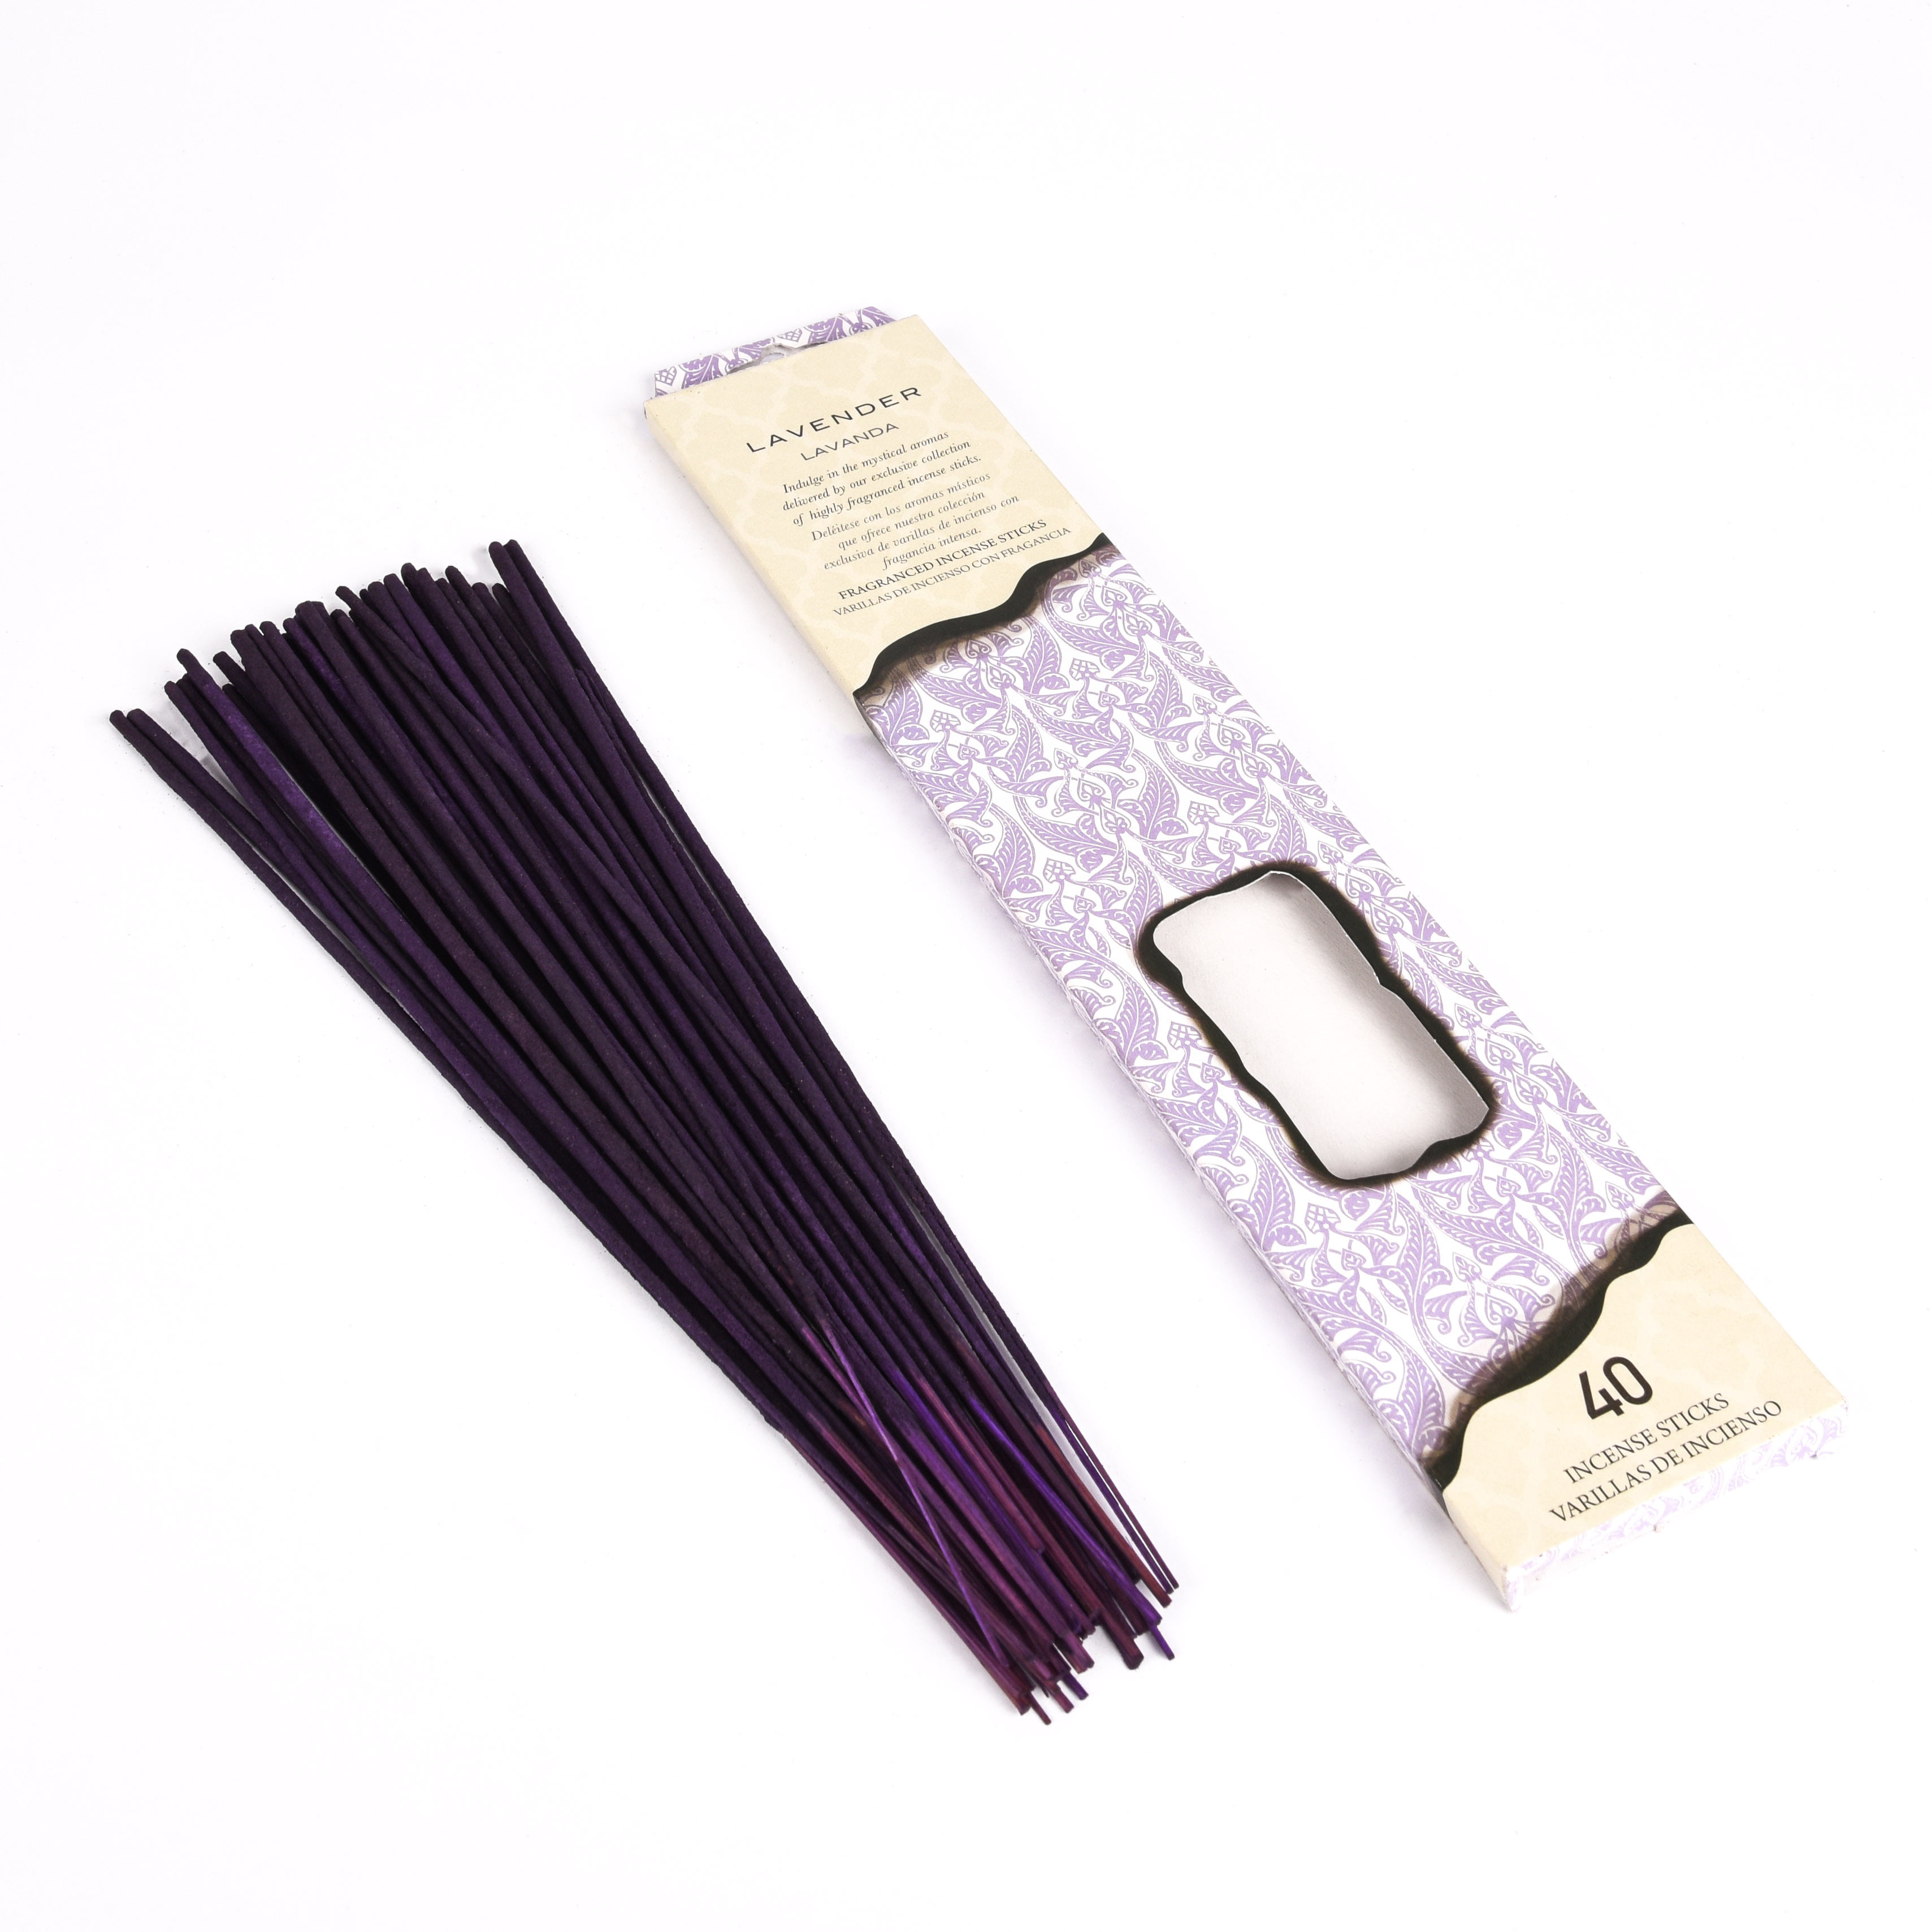 Trumiri Floral Incense Sticks Variety Pack - 120 Insence Sticks (6 Incents x 20 Insenses) - Rose Lavender Jasmine Patchouli Gardenia Lil